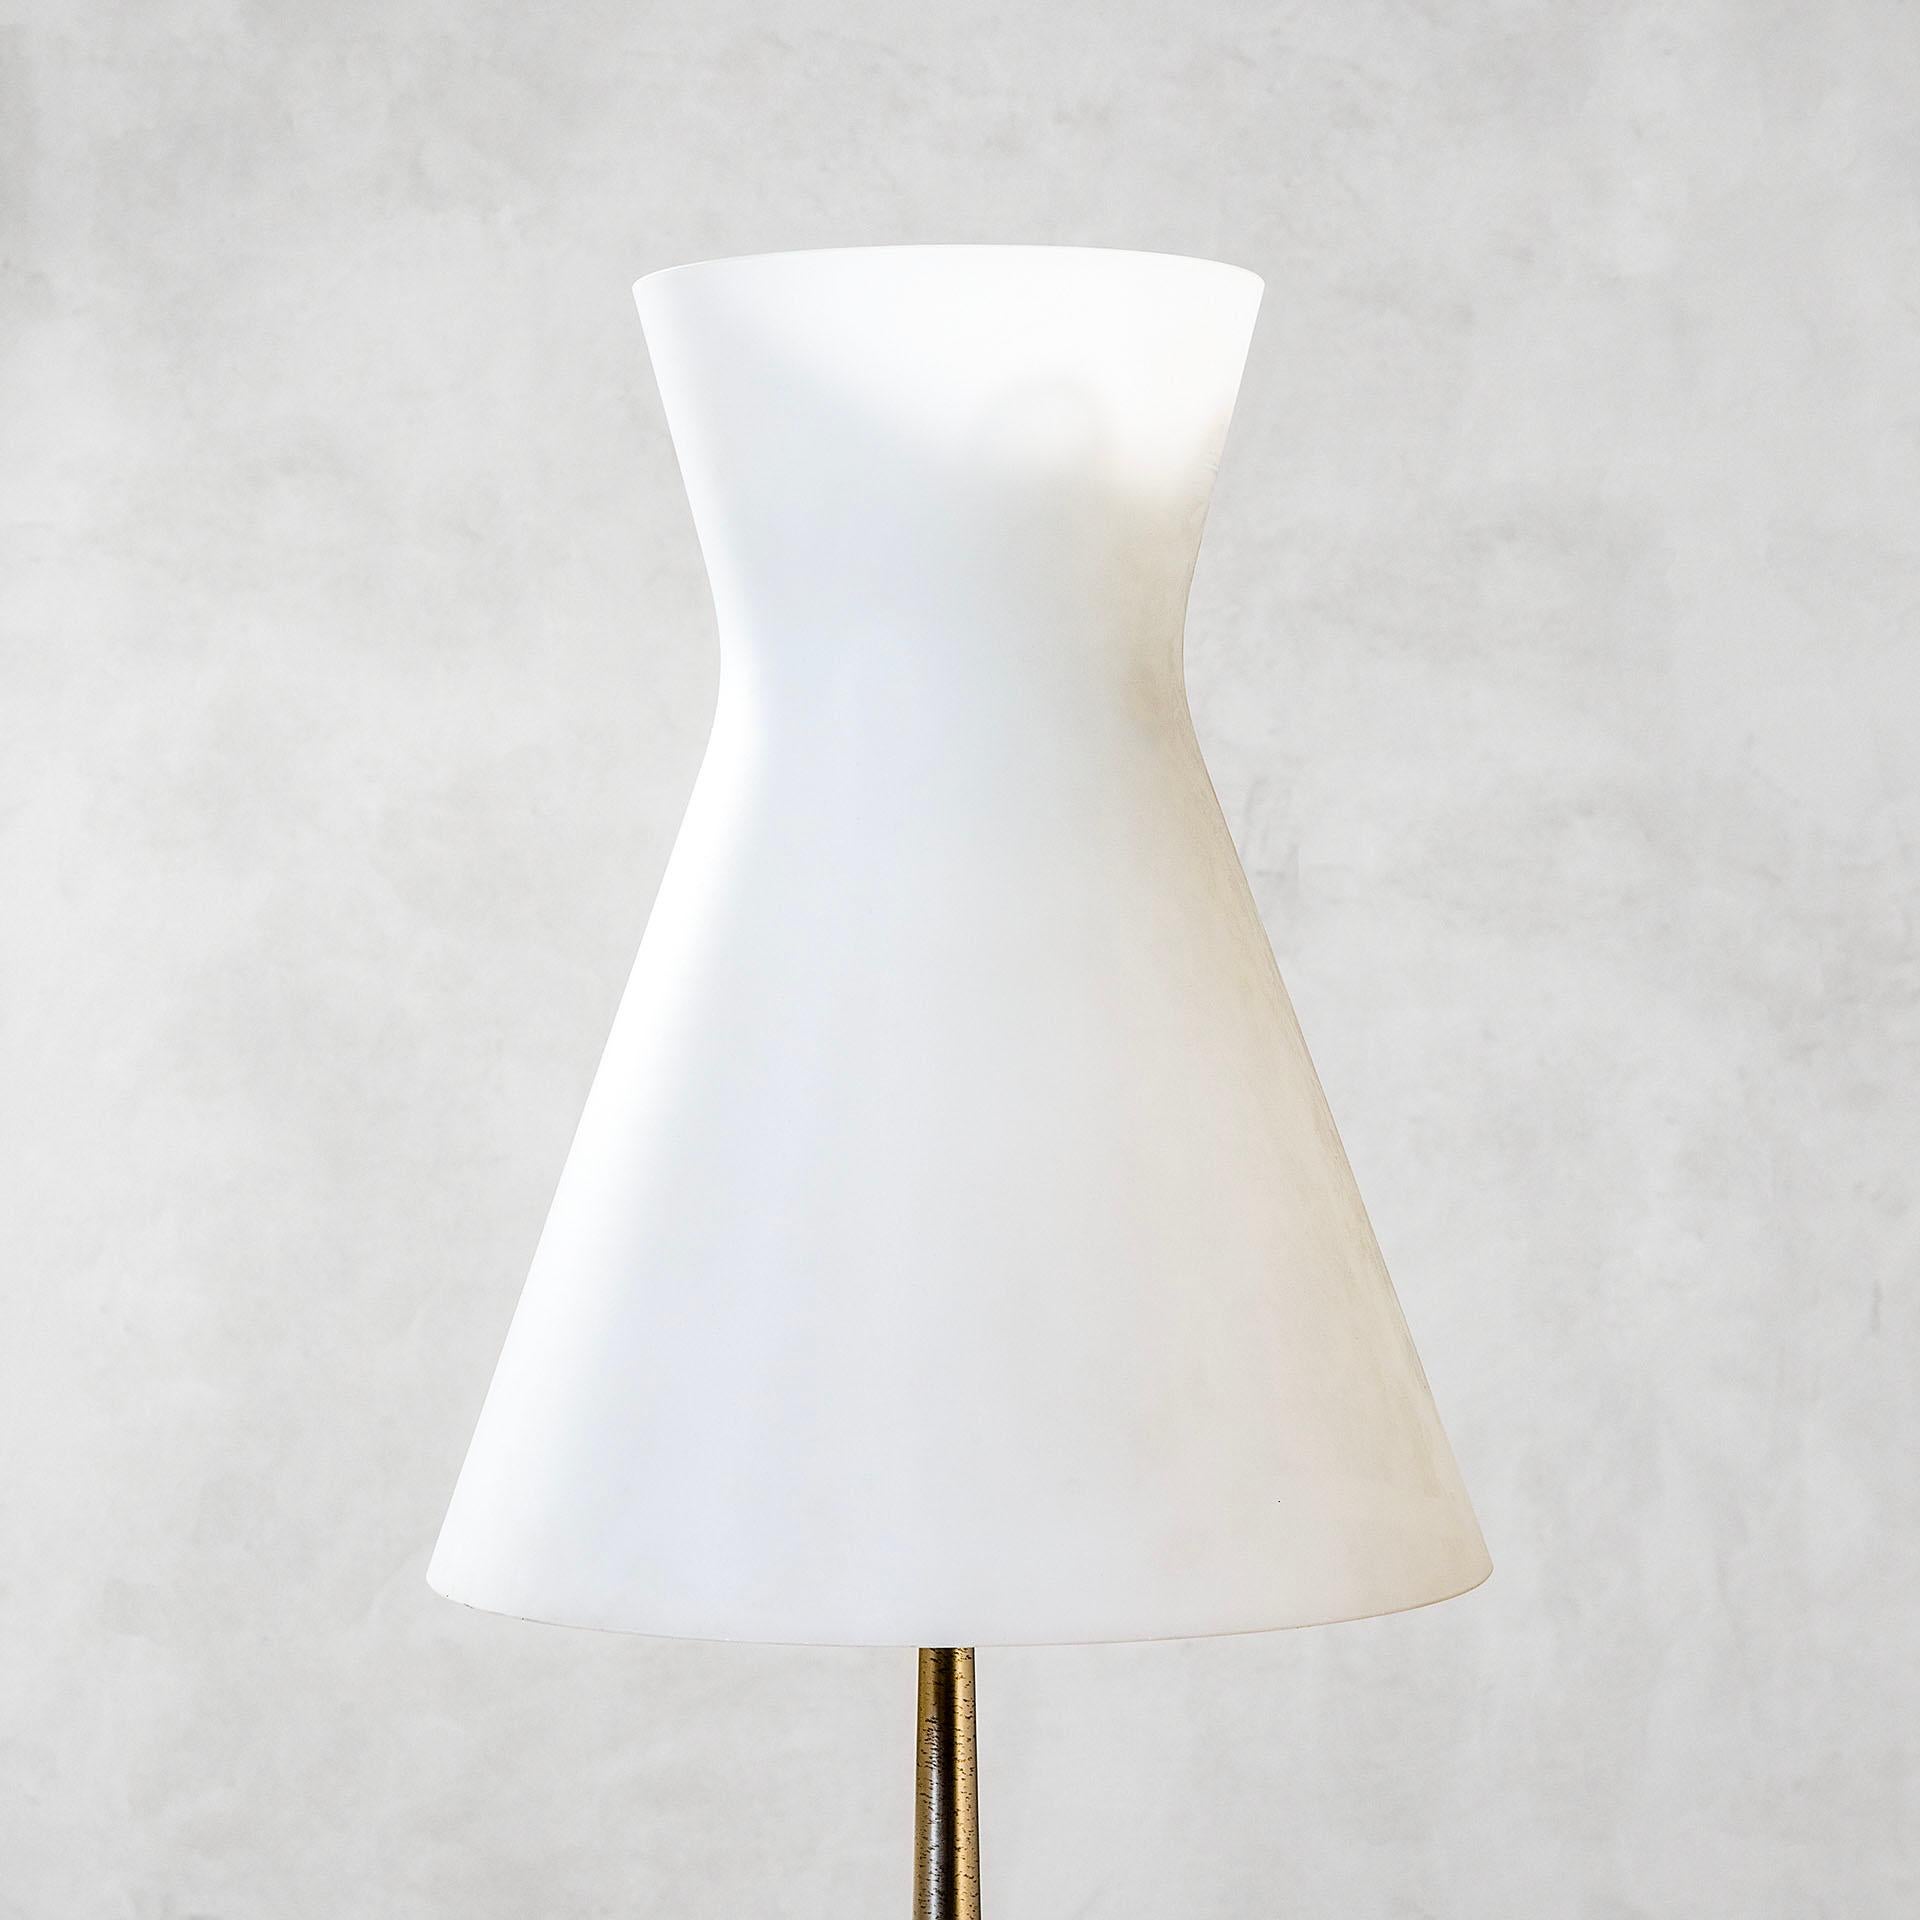 Italian 20th Century Max Ingrand Floor Lamp Mod. 2156 for Fontana Arte, 1950s For Sale